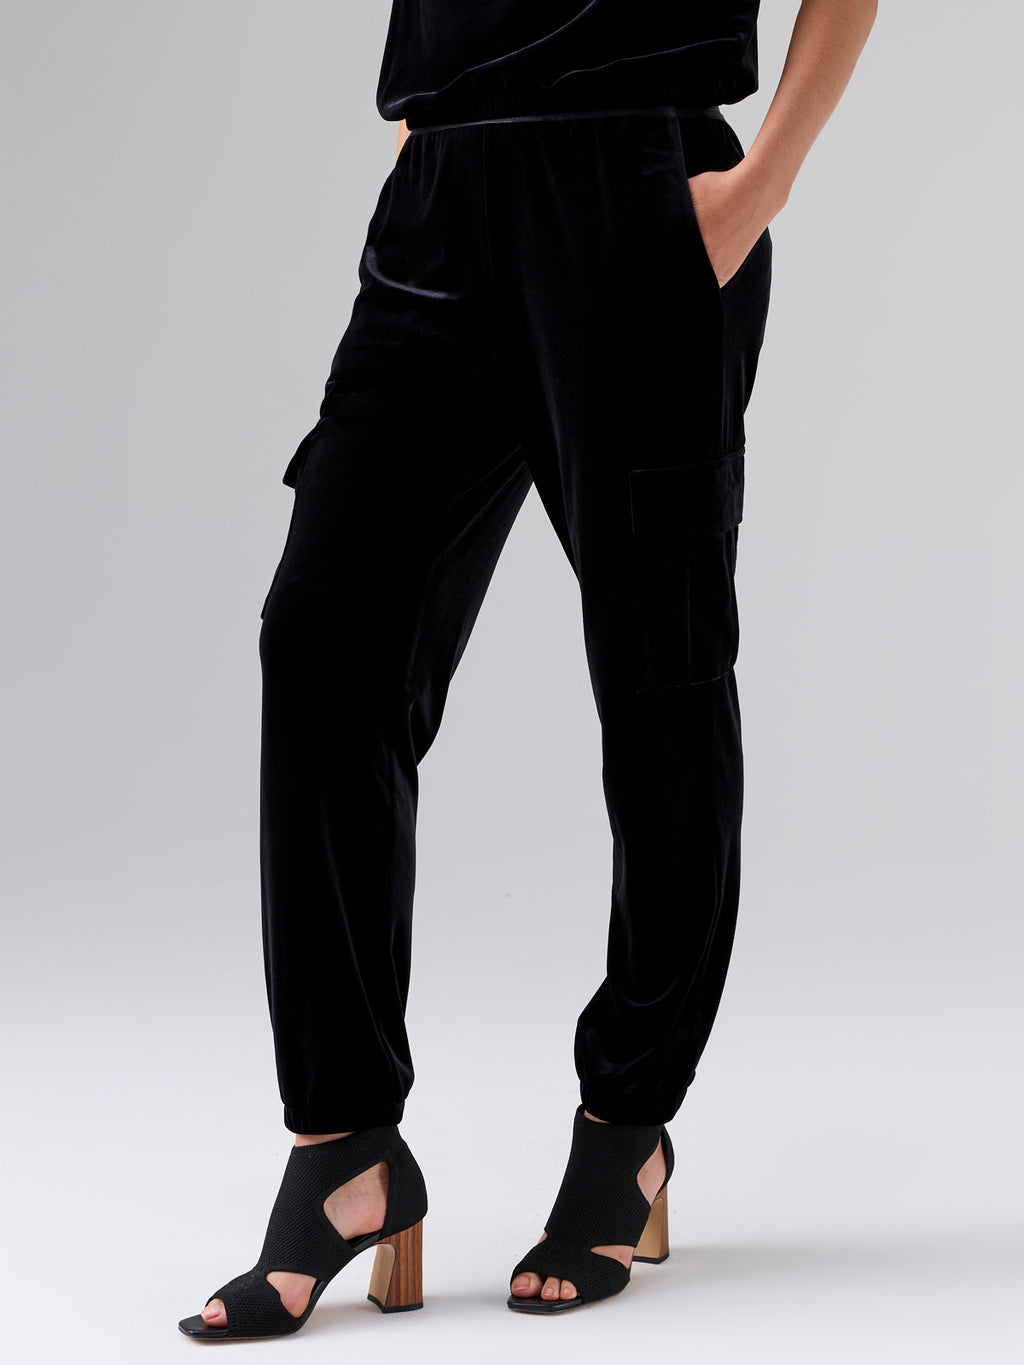 COS Velvet pants in jogger style in black